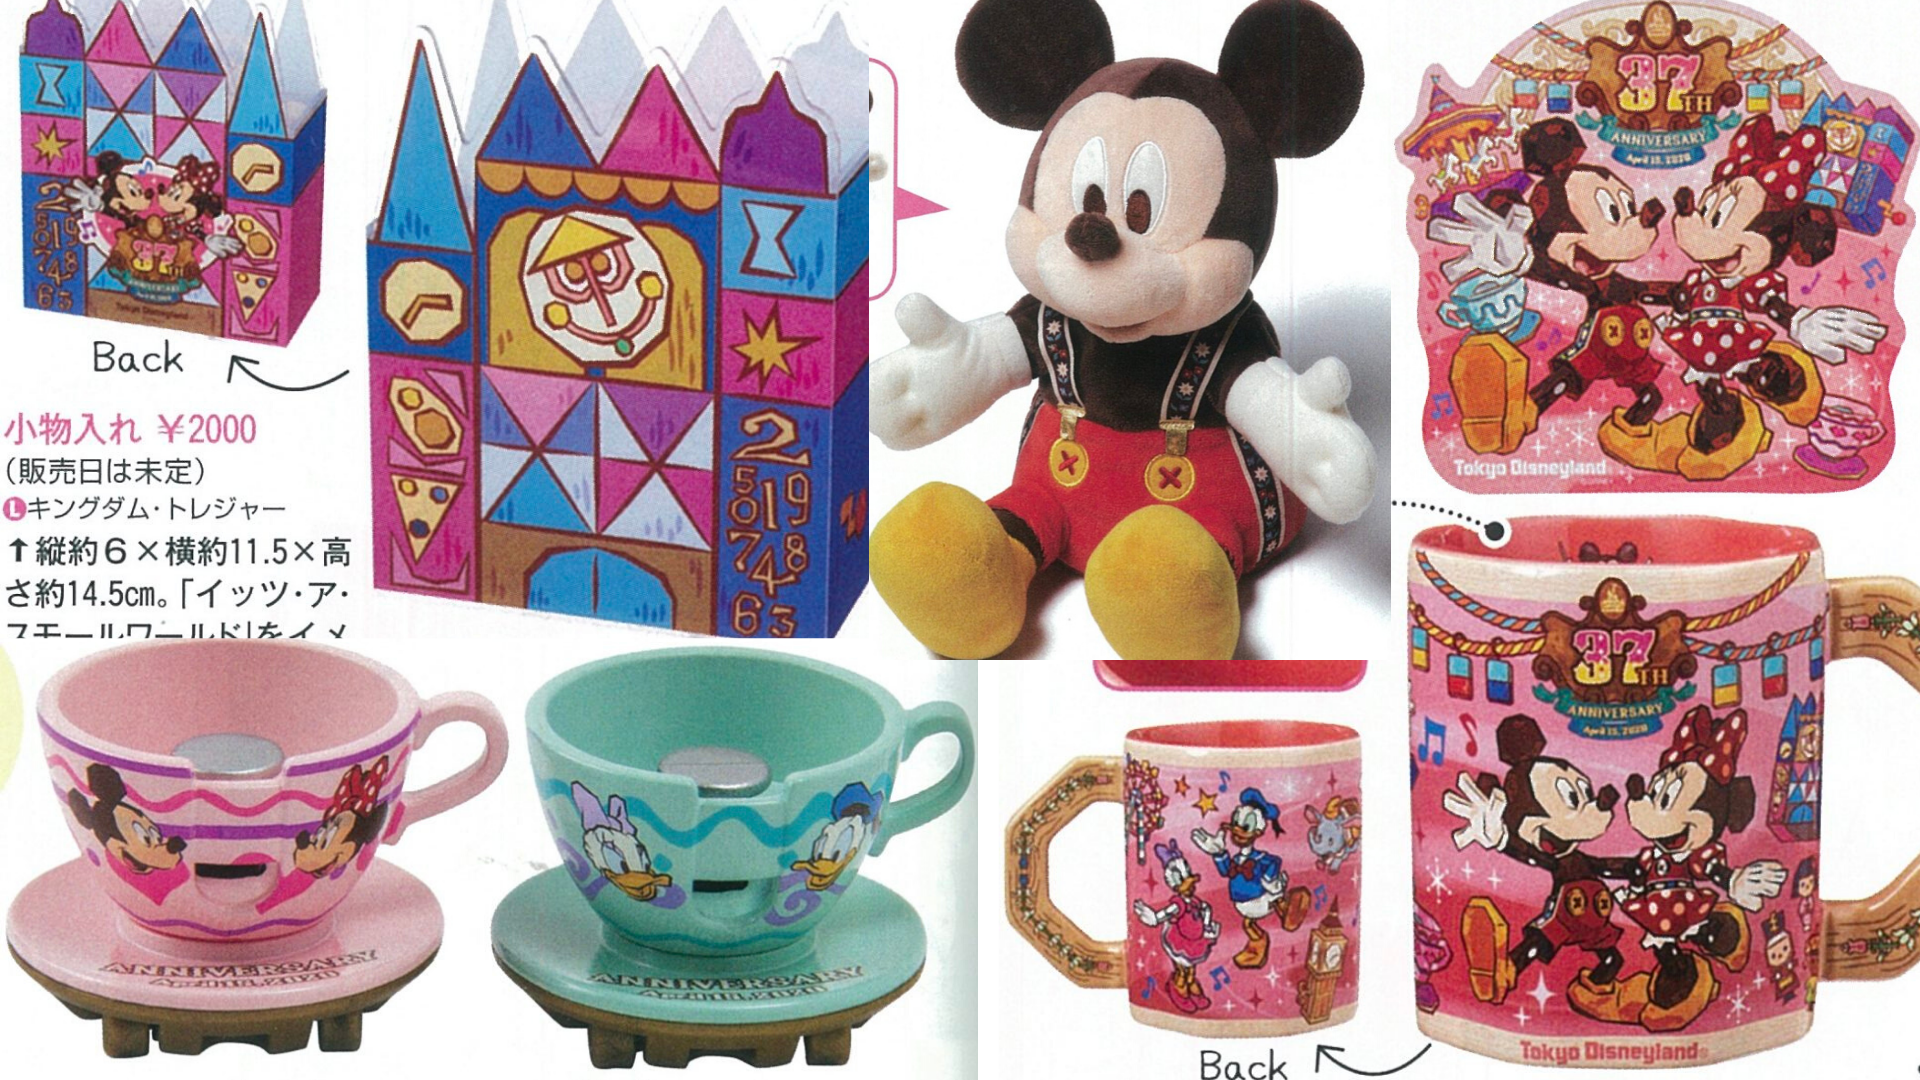 PHOTOS New Tokyo Disneyland 37th Anniversary Merchandise Collection